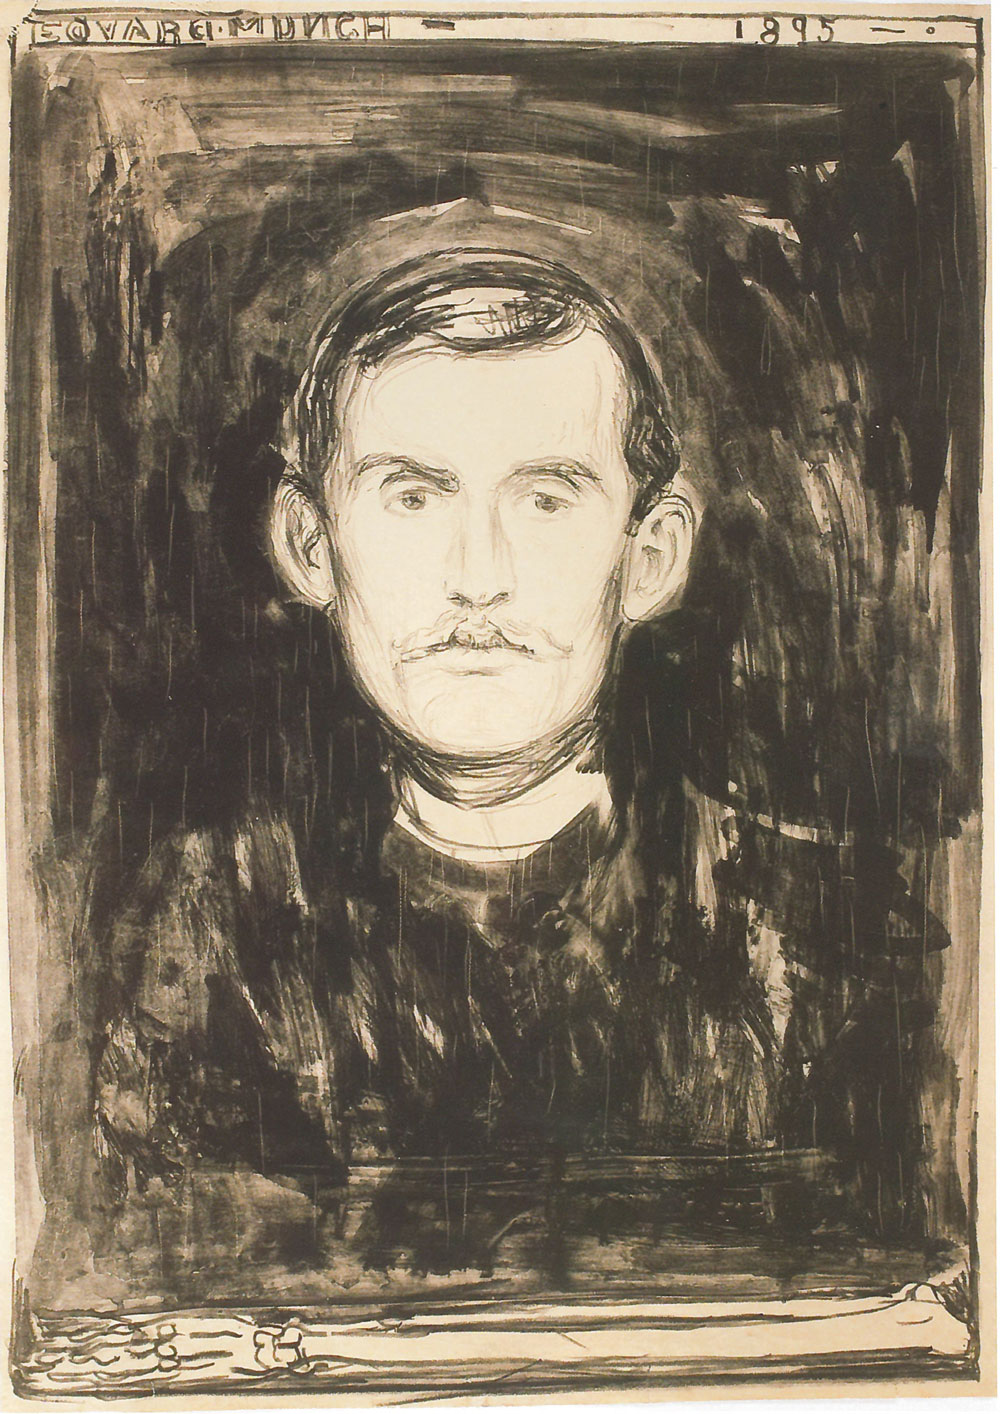 Эдвард Мунк. "Автопортрет со скелетом руки". 1895. Музей Мунка, Осло.